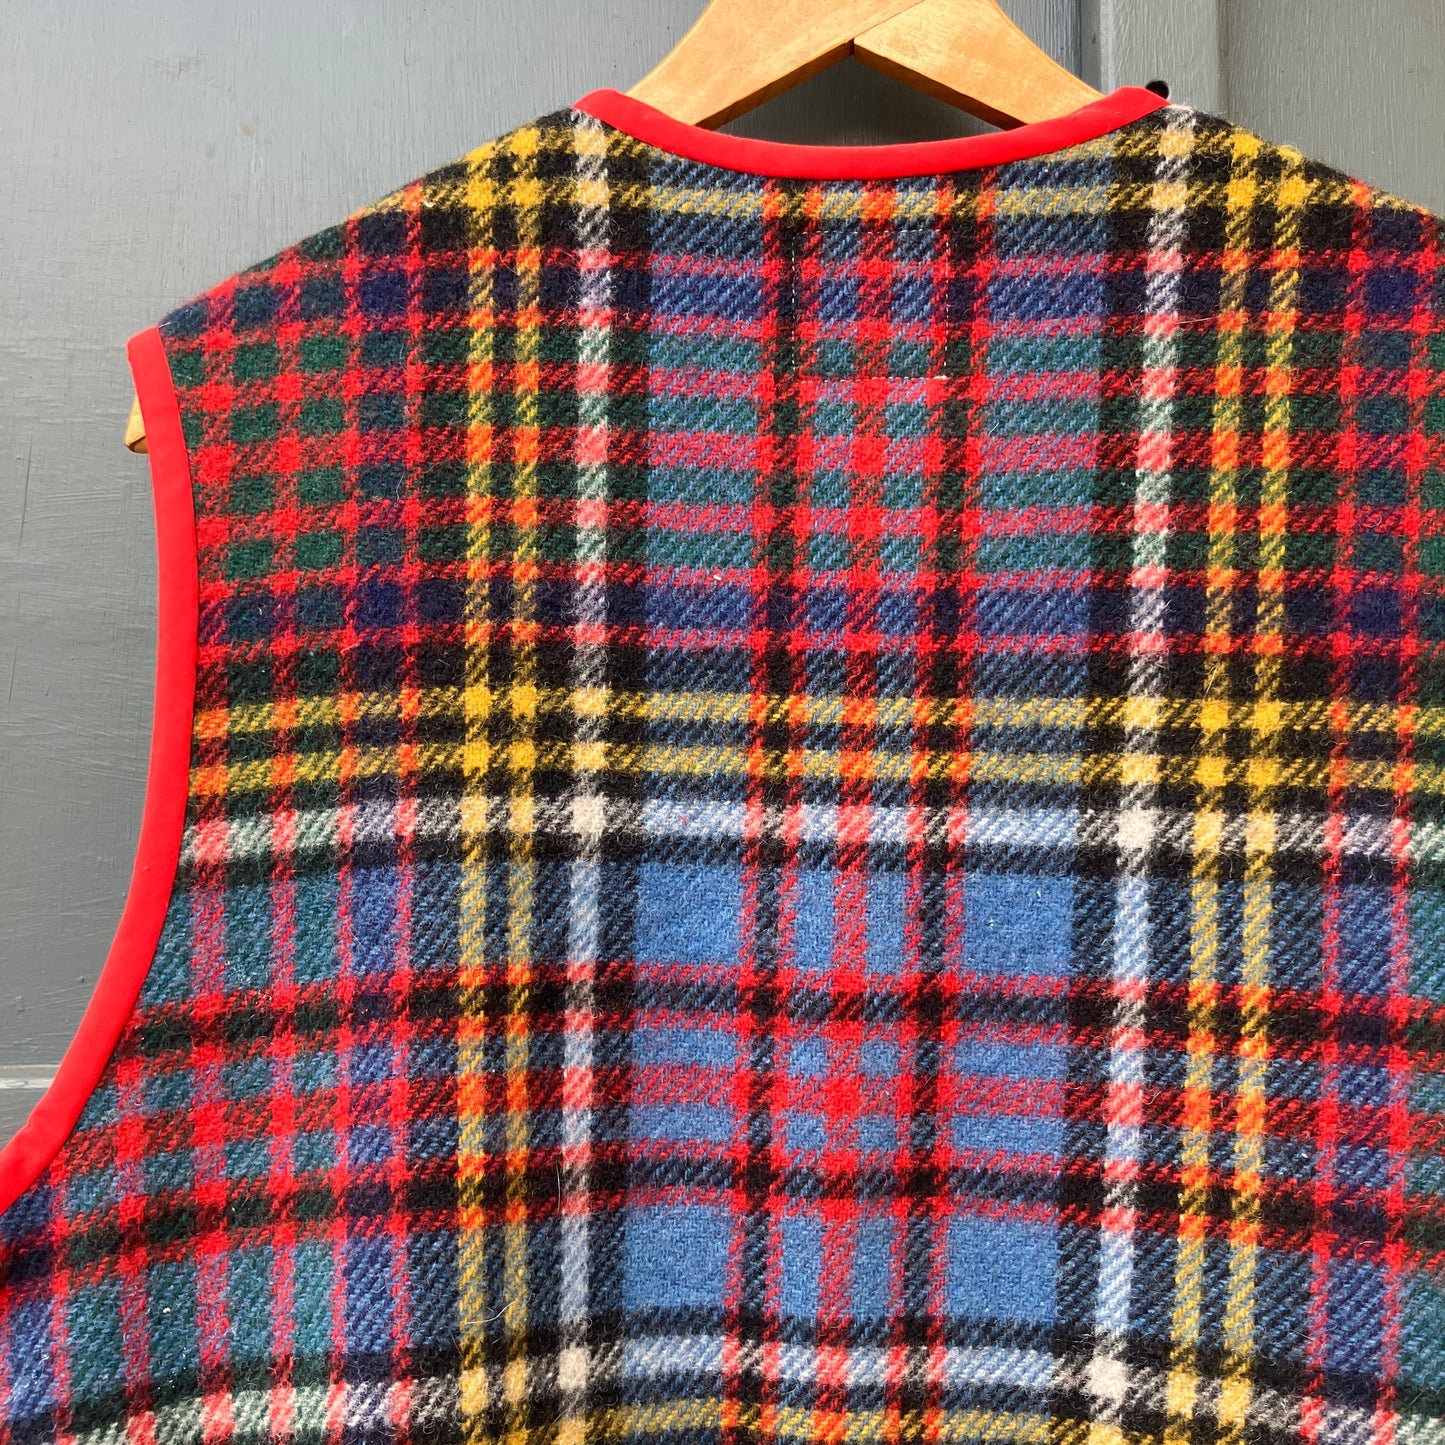 Tartan recycled blanket vest